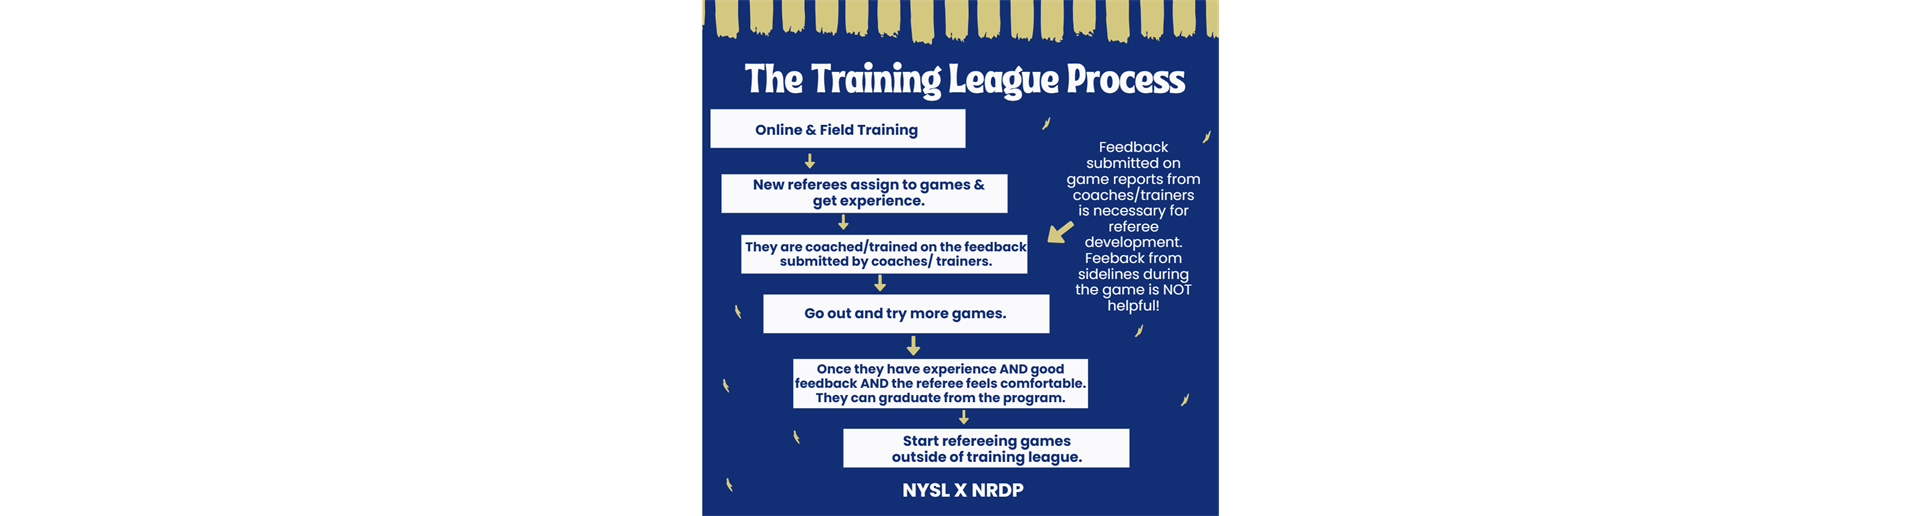 Training League Process